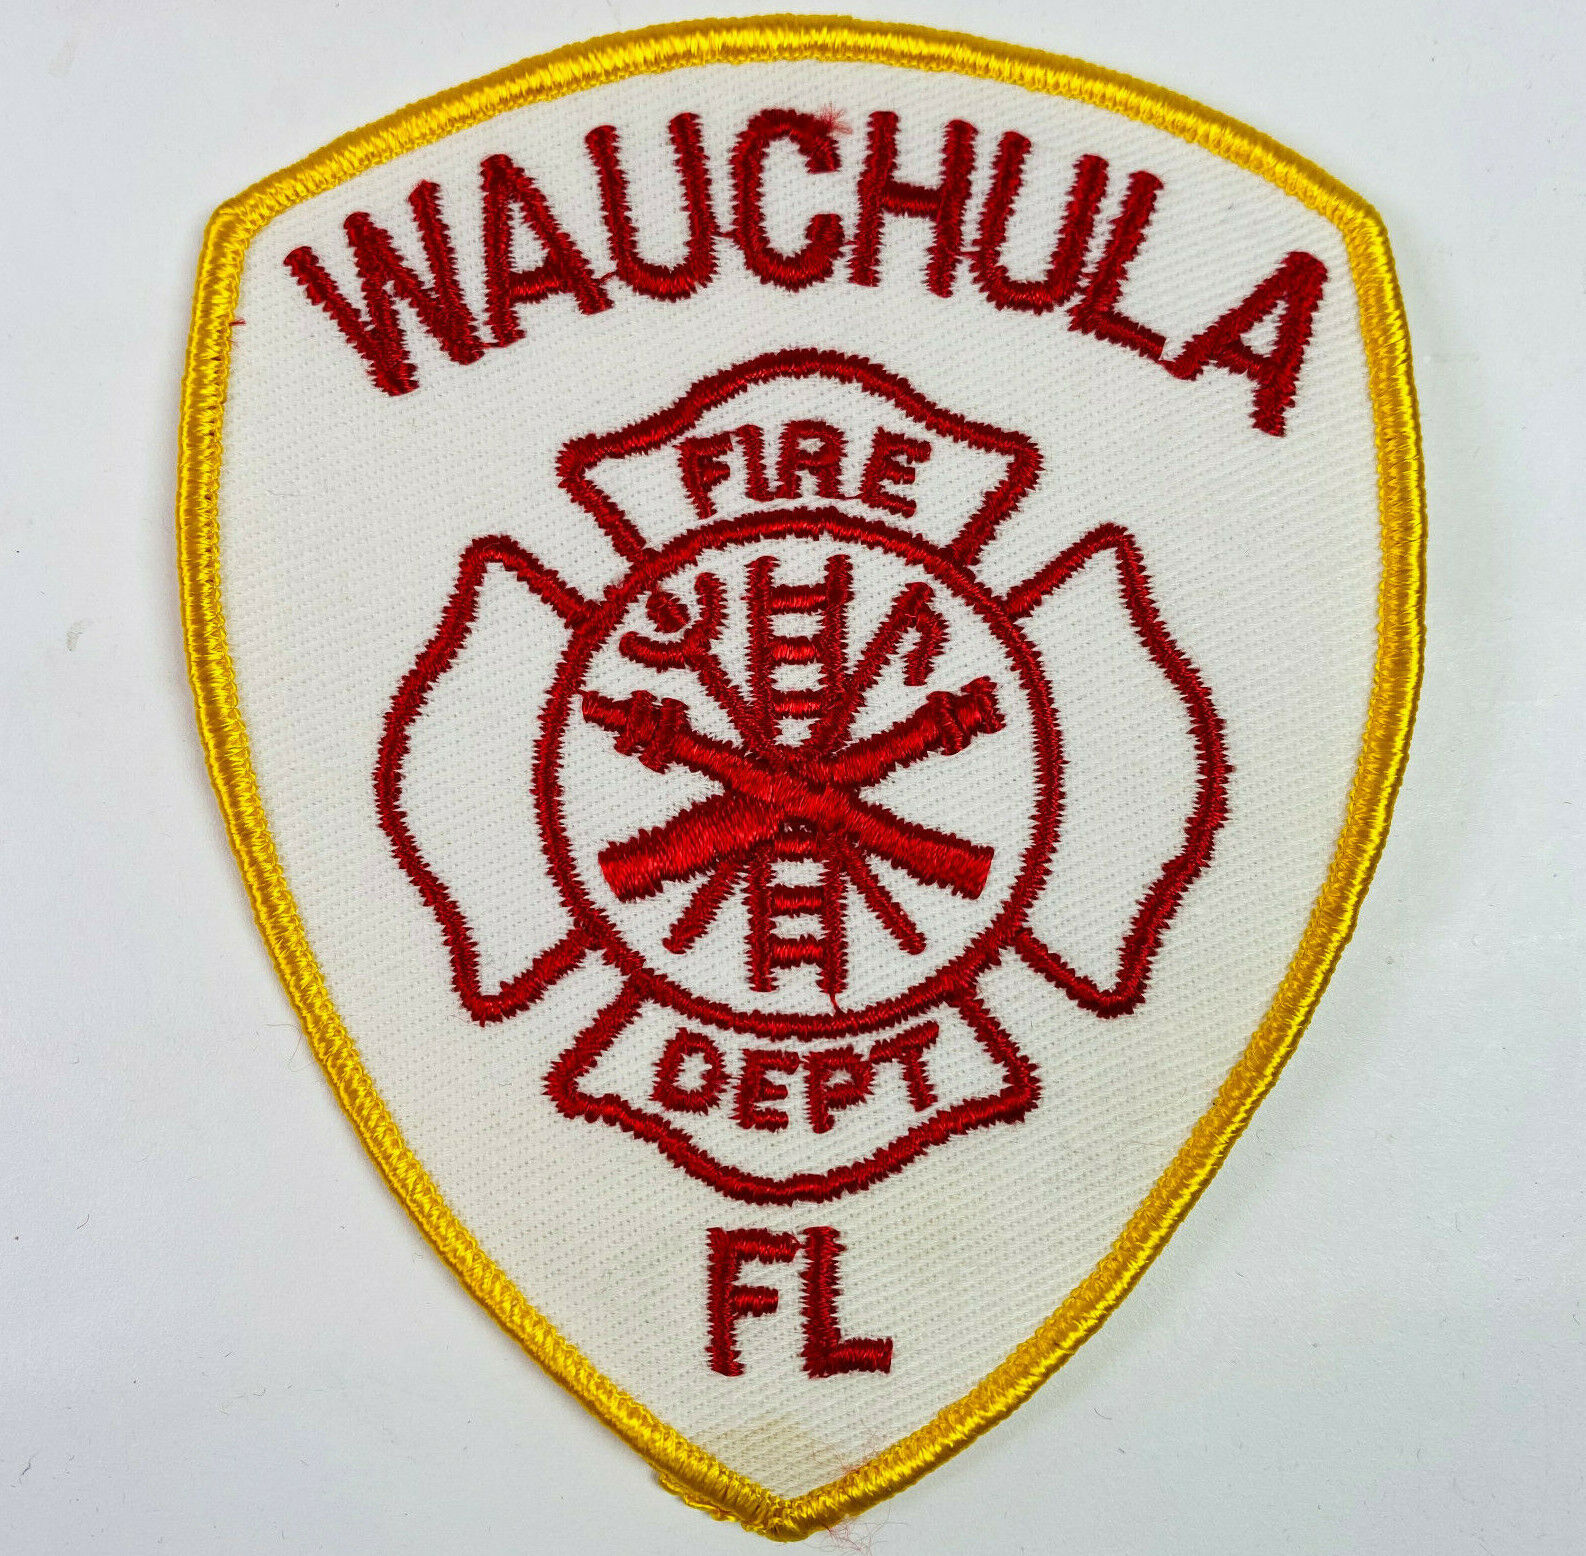 Wauchula Fire Hardee County Florida FL Patch D9